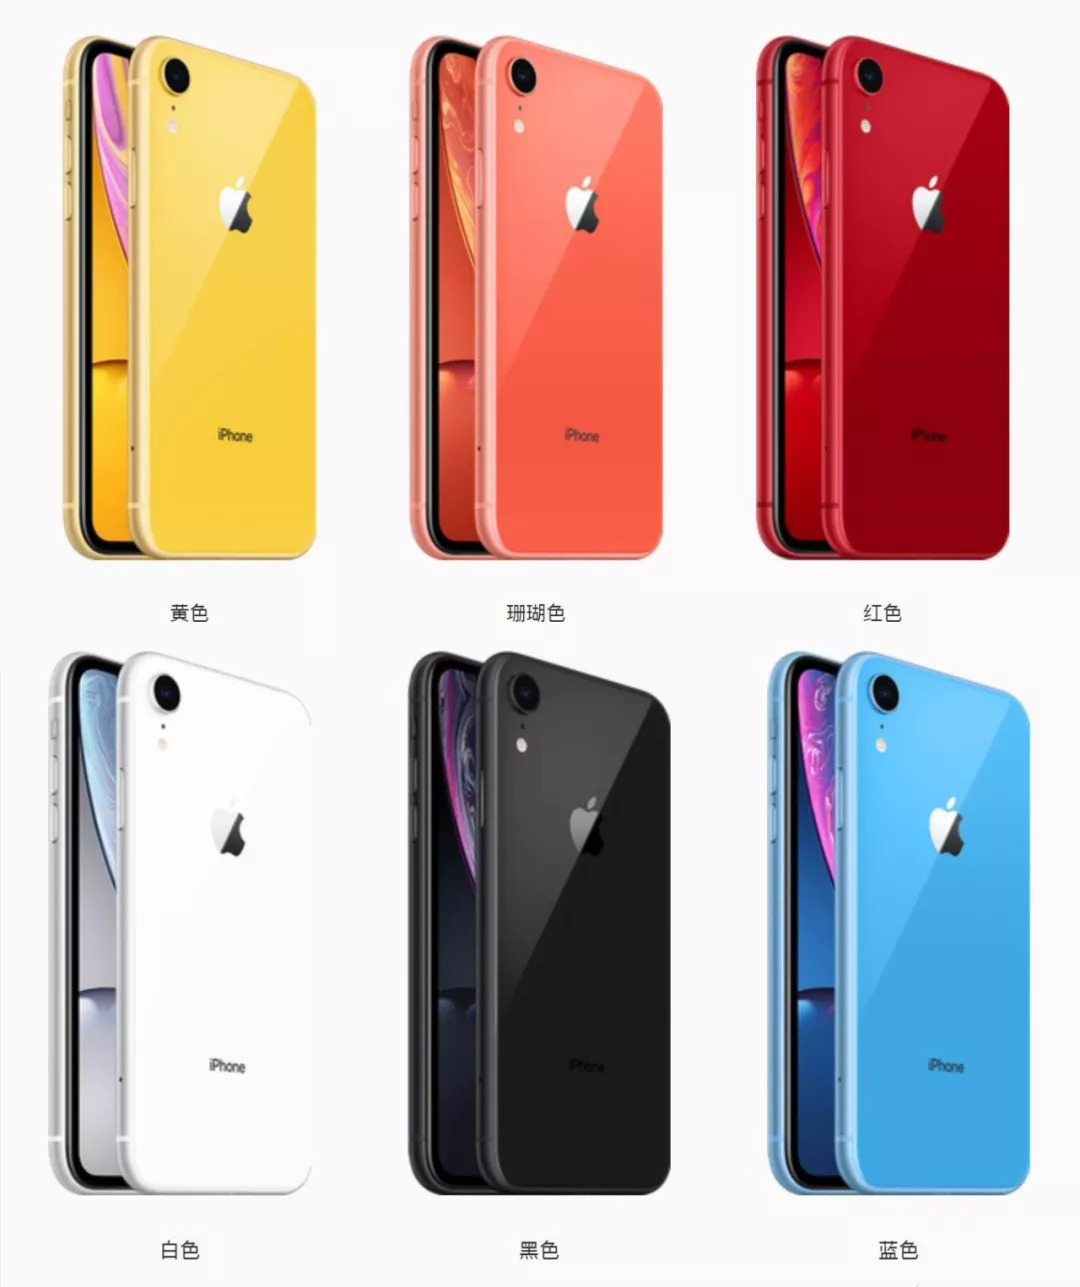 xs和xs max便宜点吧 所以iphone xr有多种颜色 黑,白,蓝,黄,珊瑚,红色